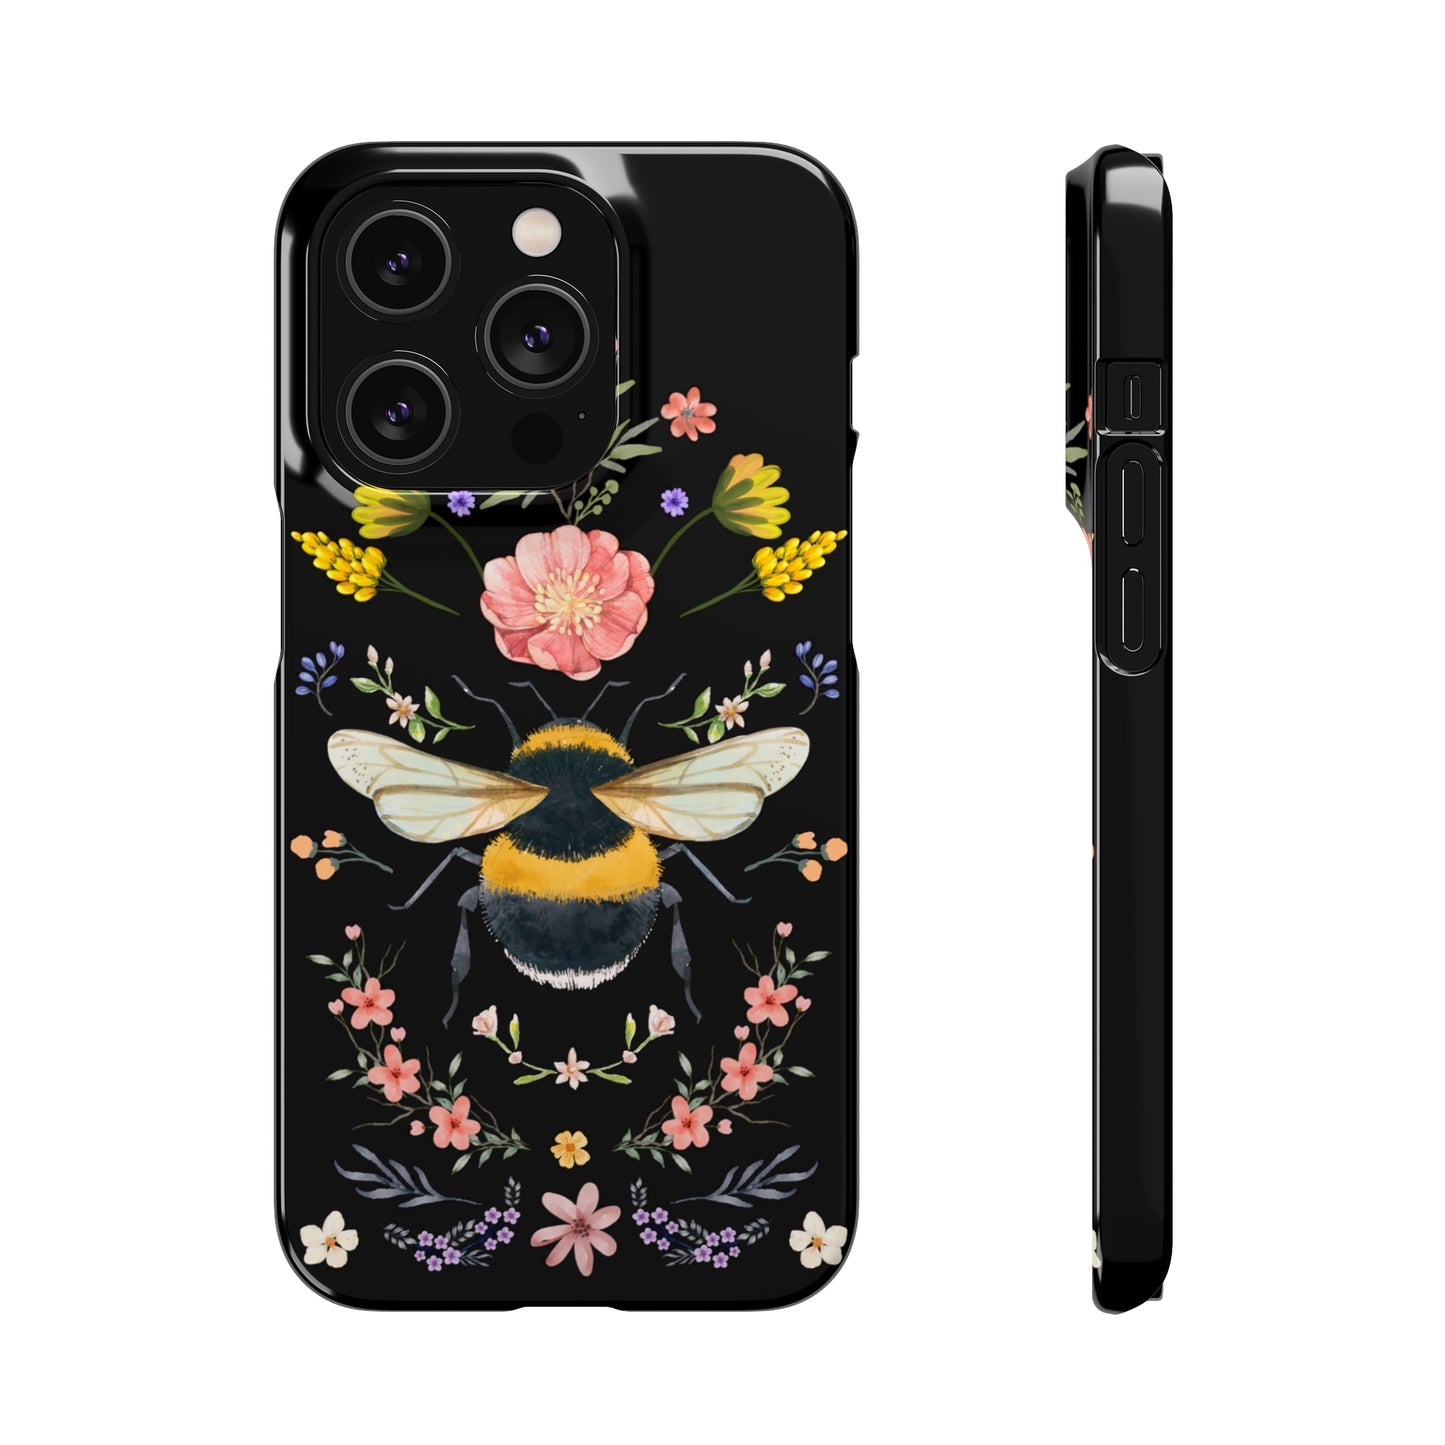 Bumblebee Cases